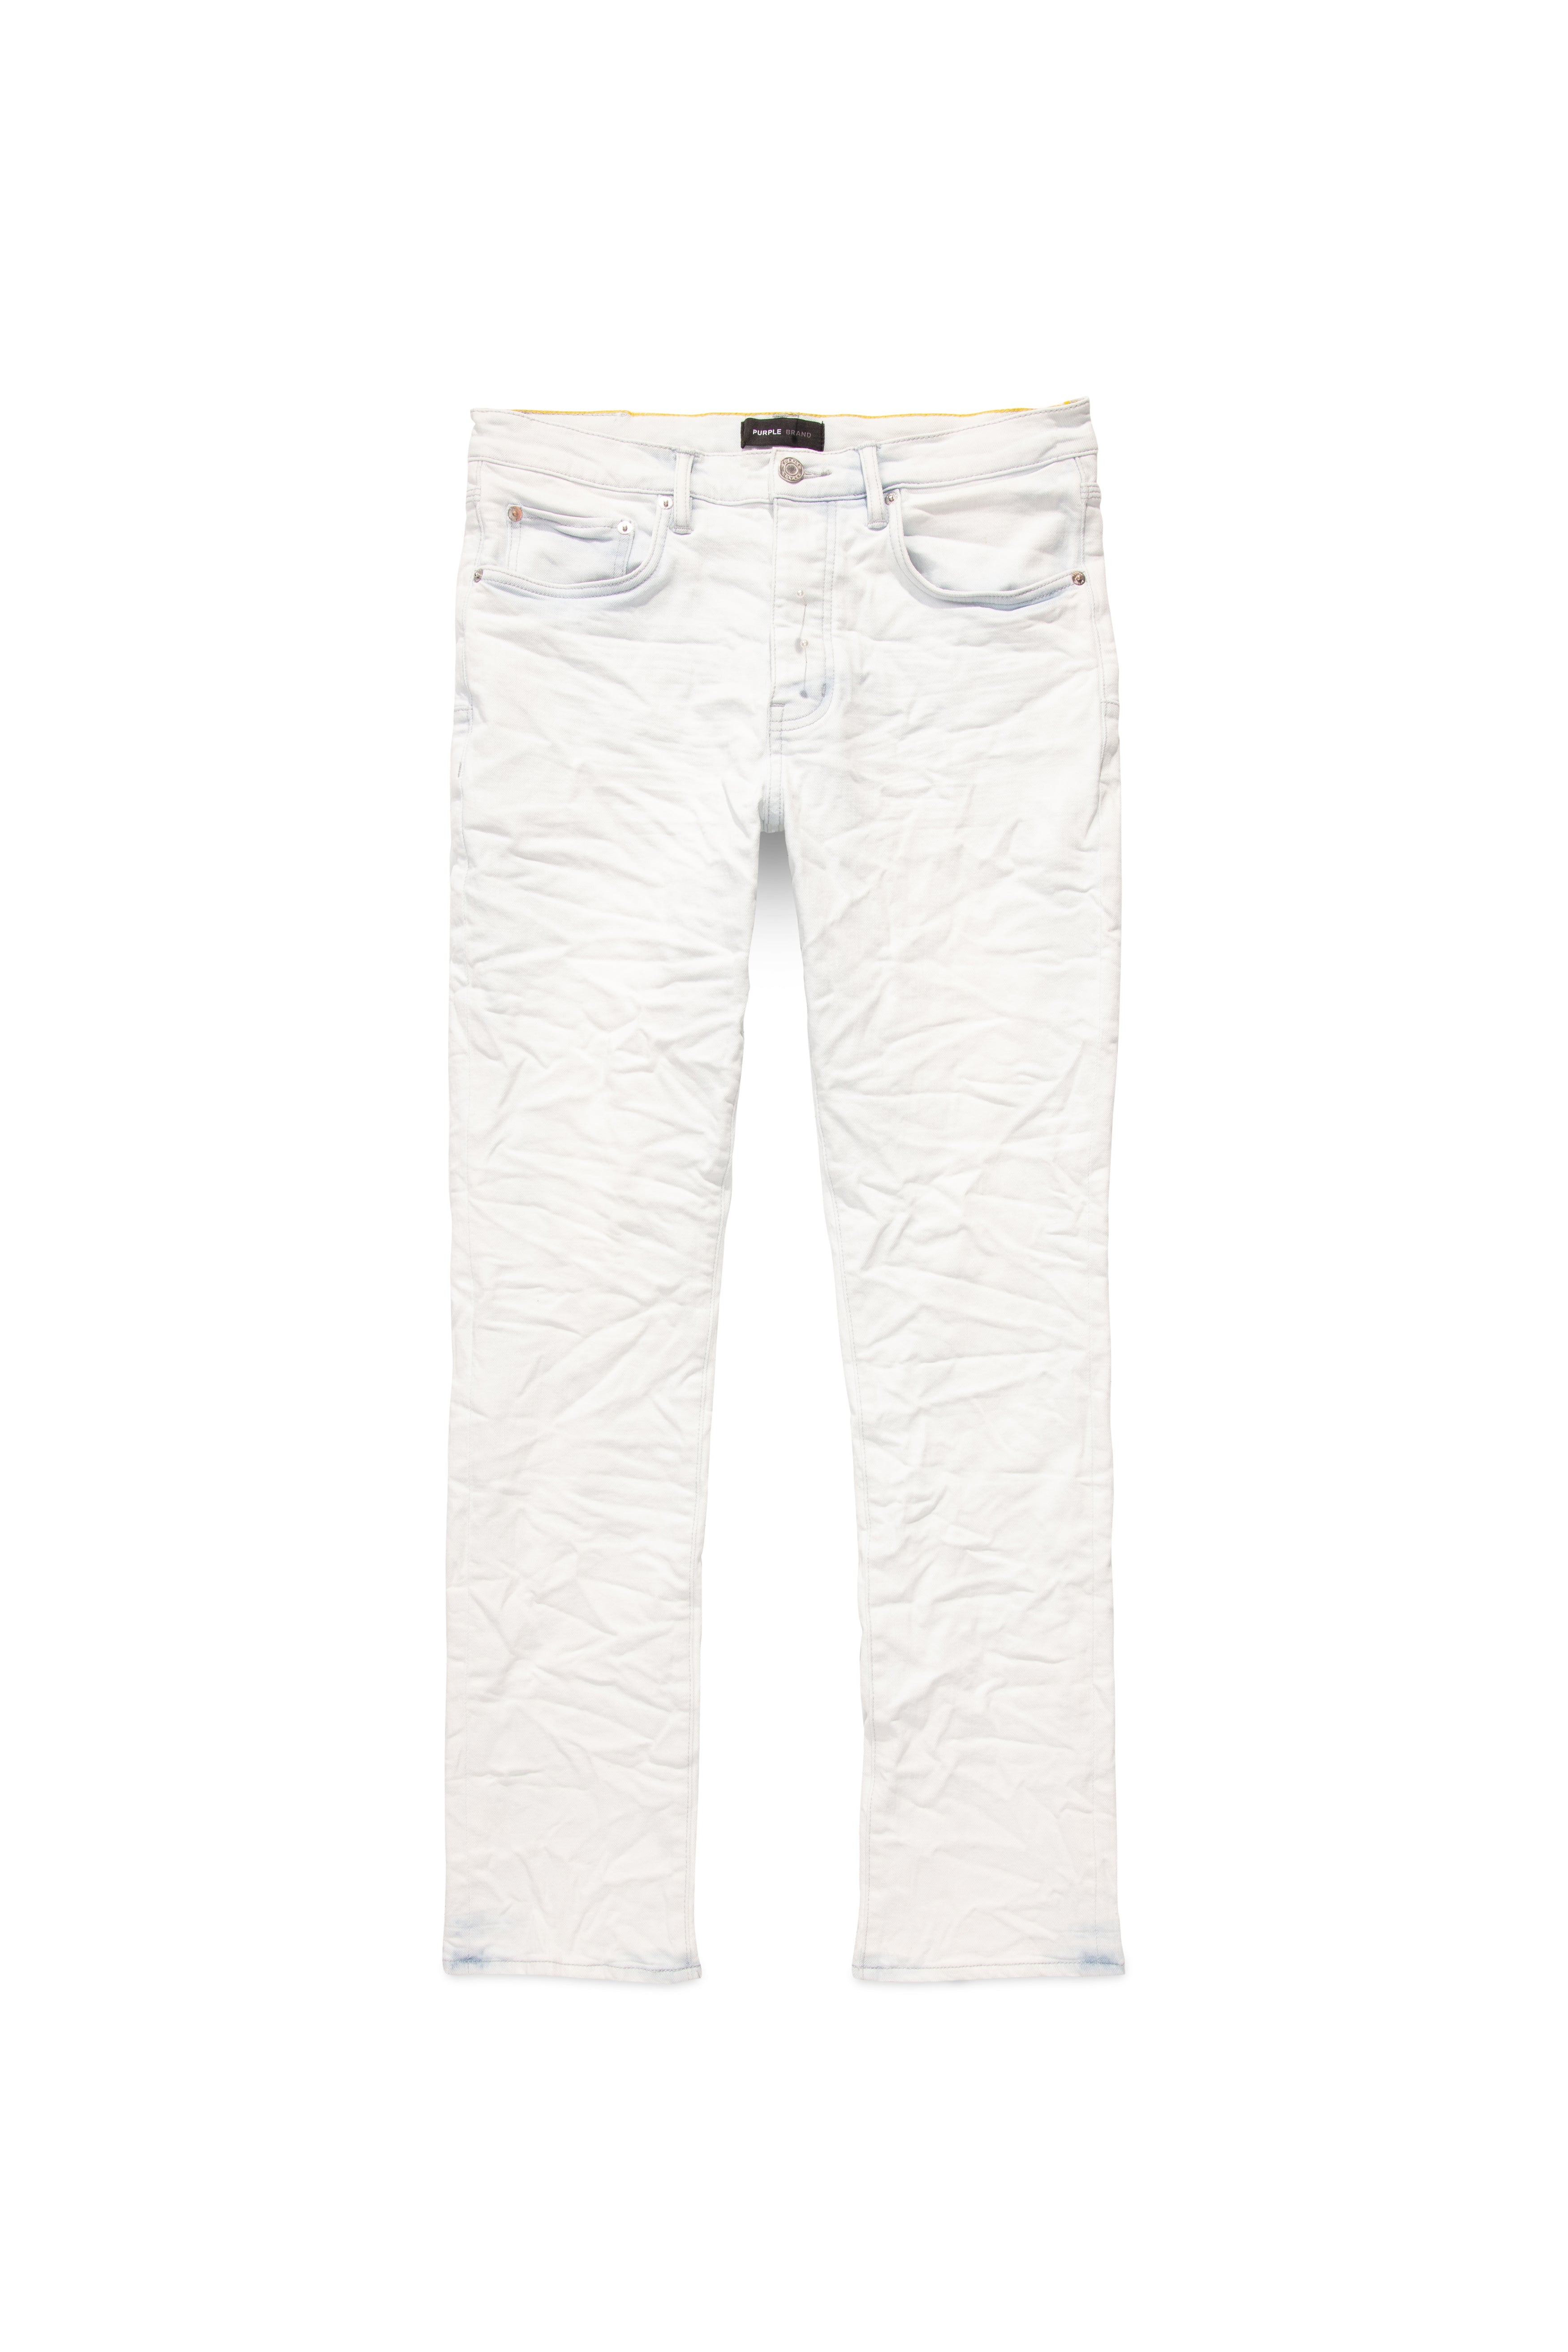 Buy PURPLE BRAND Mid Rise Straight Jean 'Faded Grey' - P005